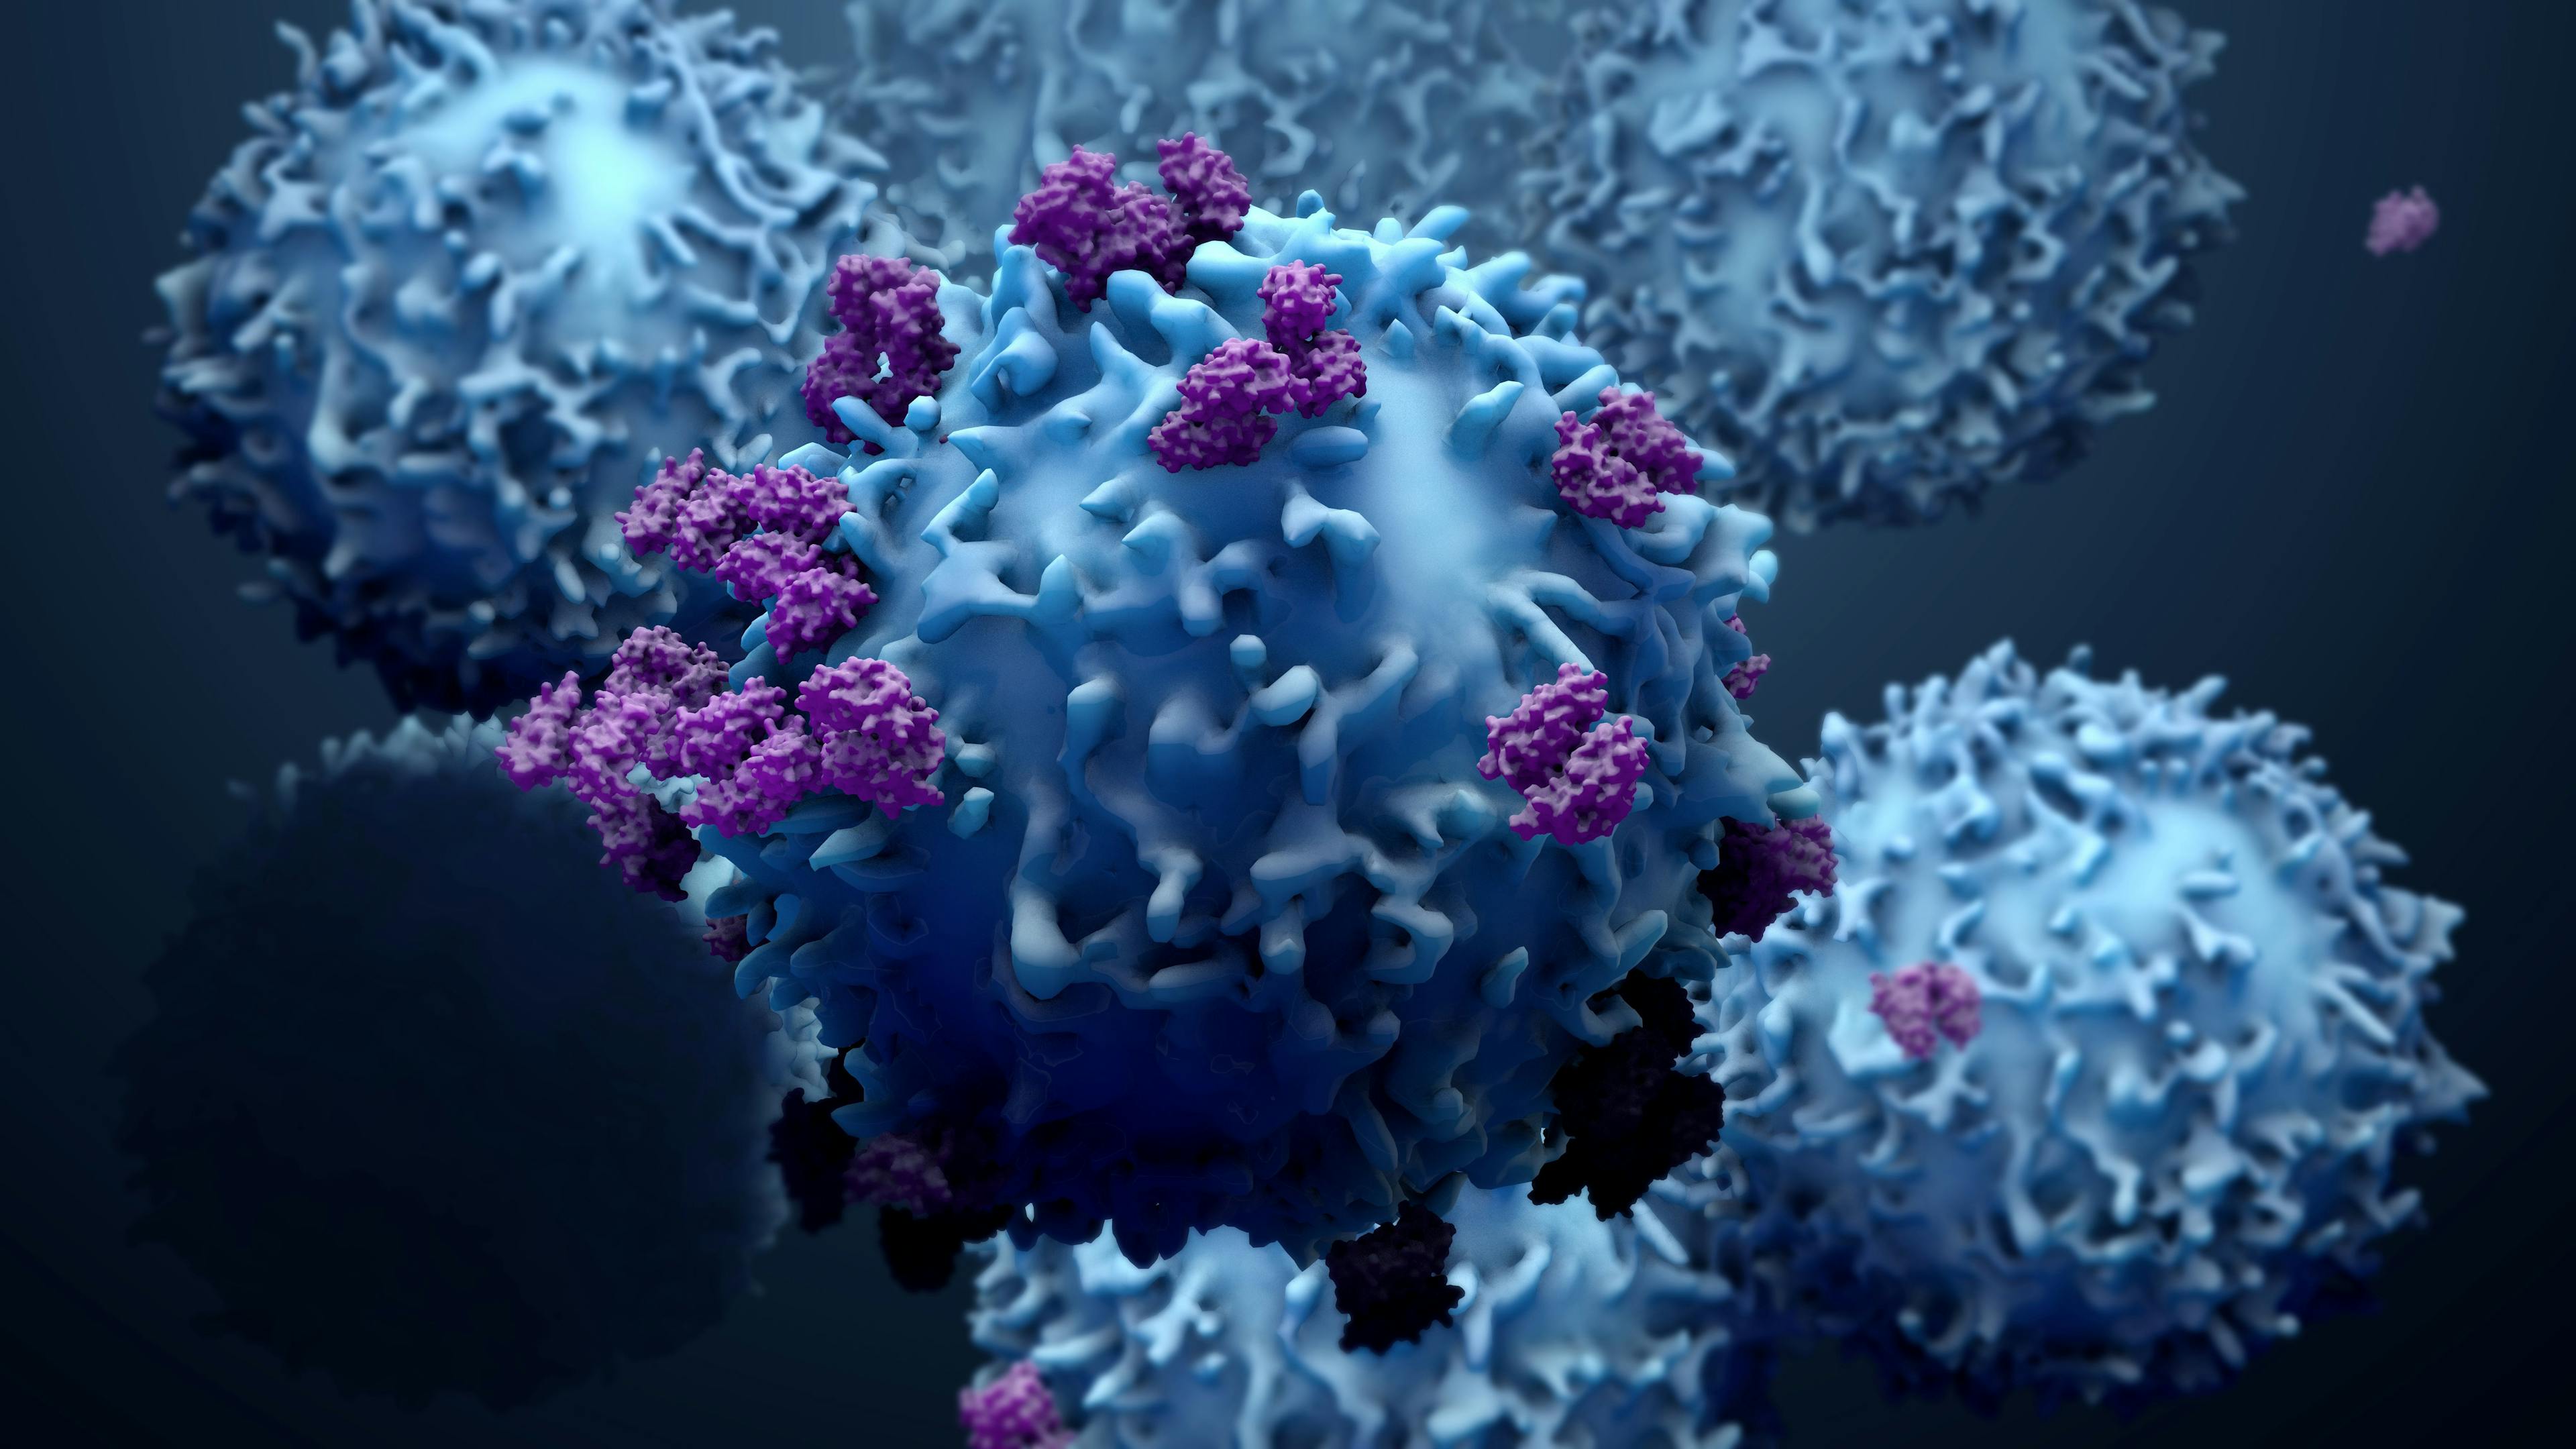 3d illustration proteins with lymphocytes , t cells or cancer cells | Image Credit: © Design Cells - www.stock.adobe.com